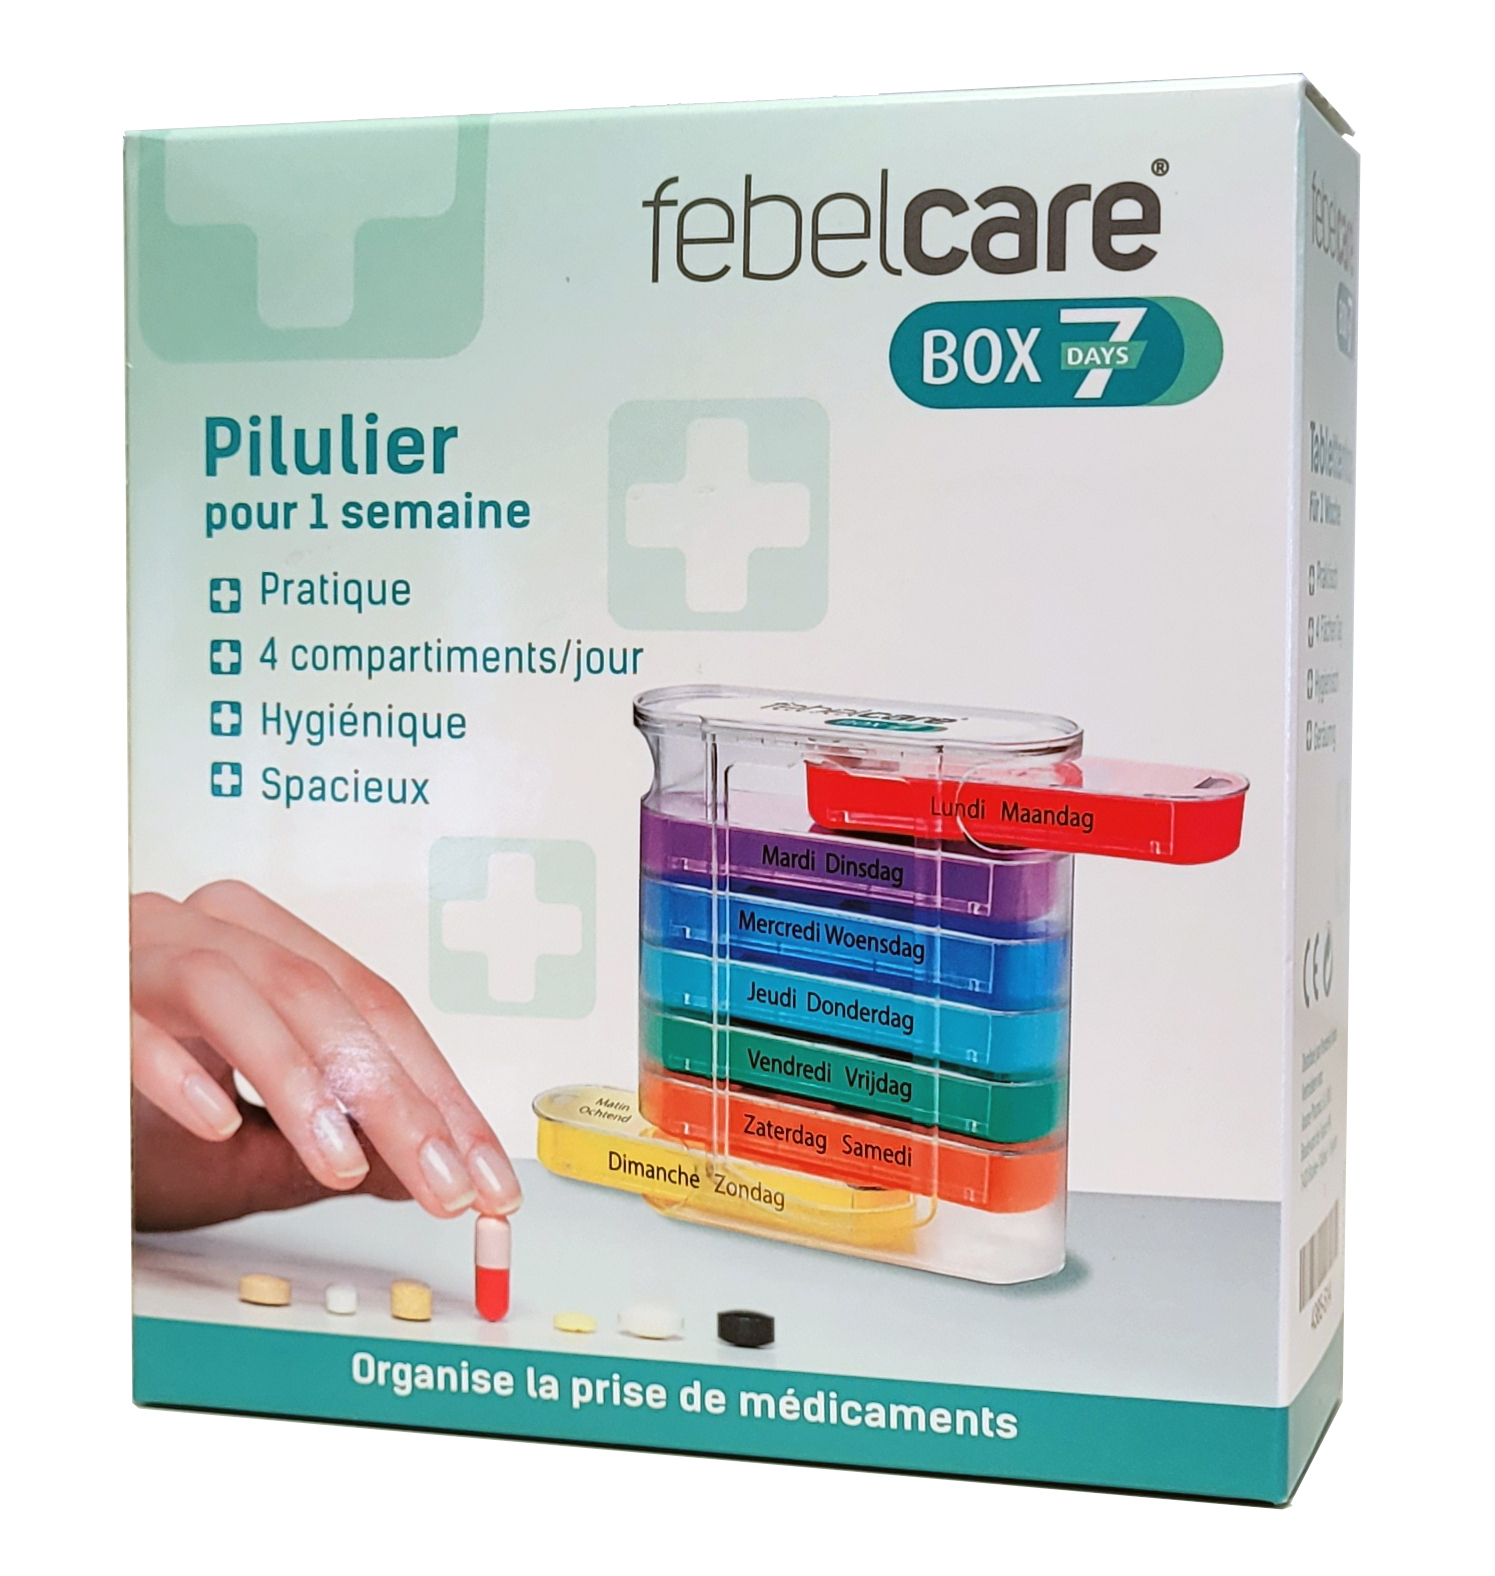 Febelcare Box 7 Days Pilulier